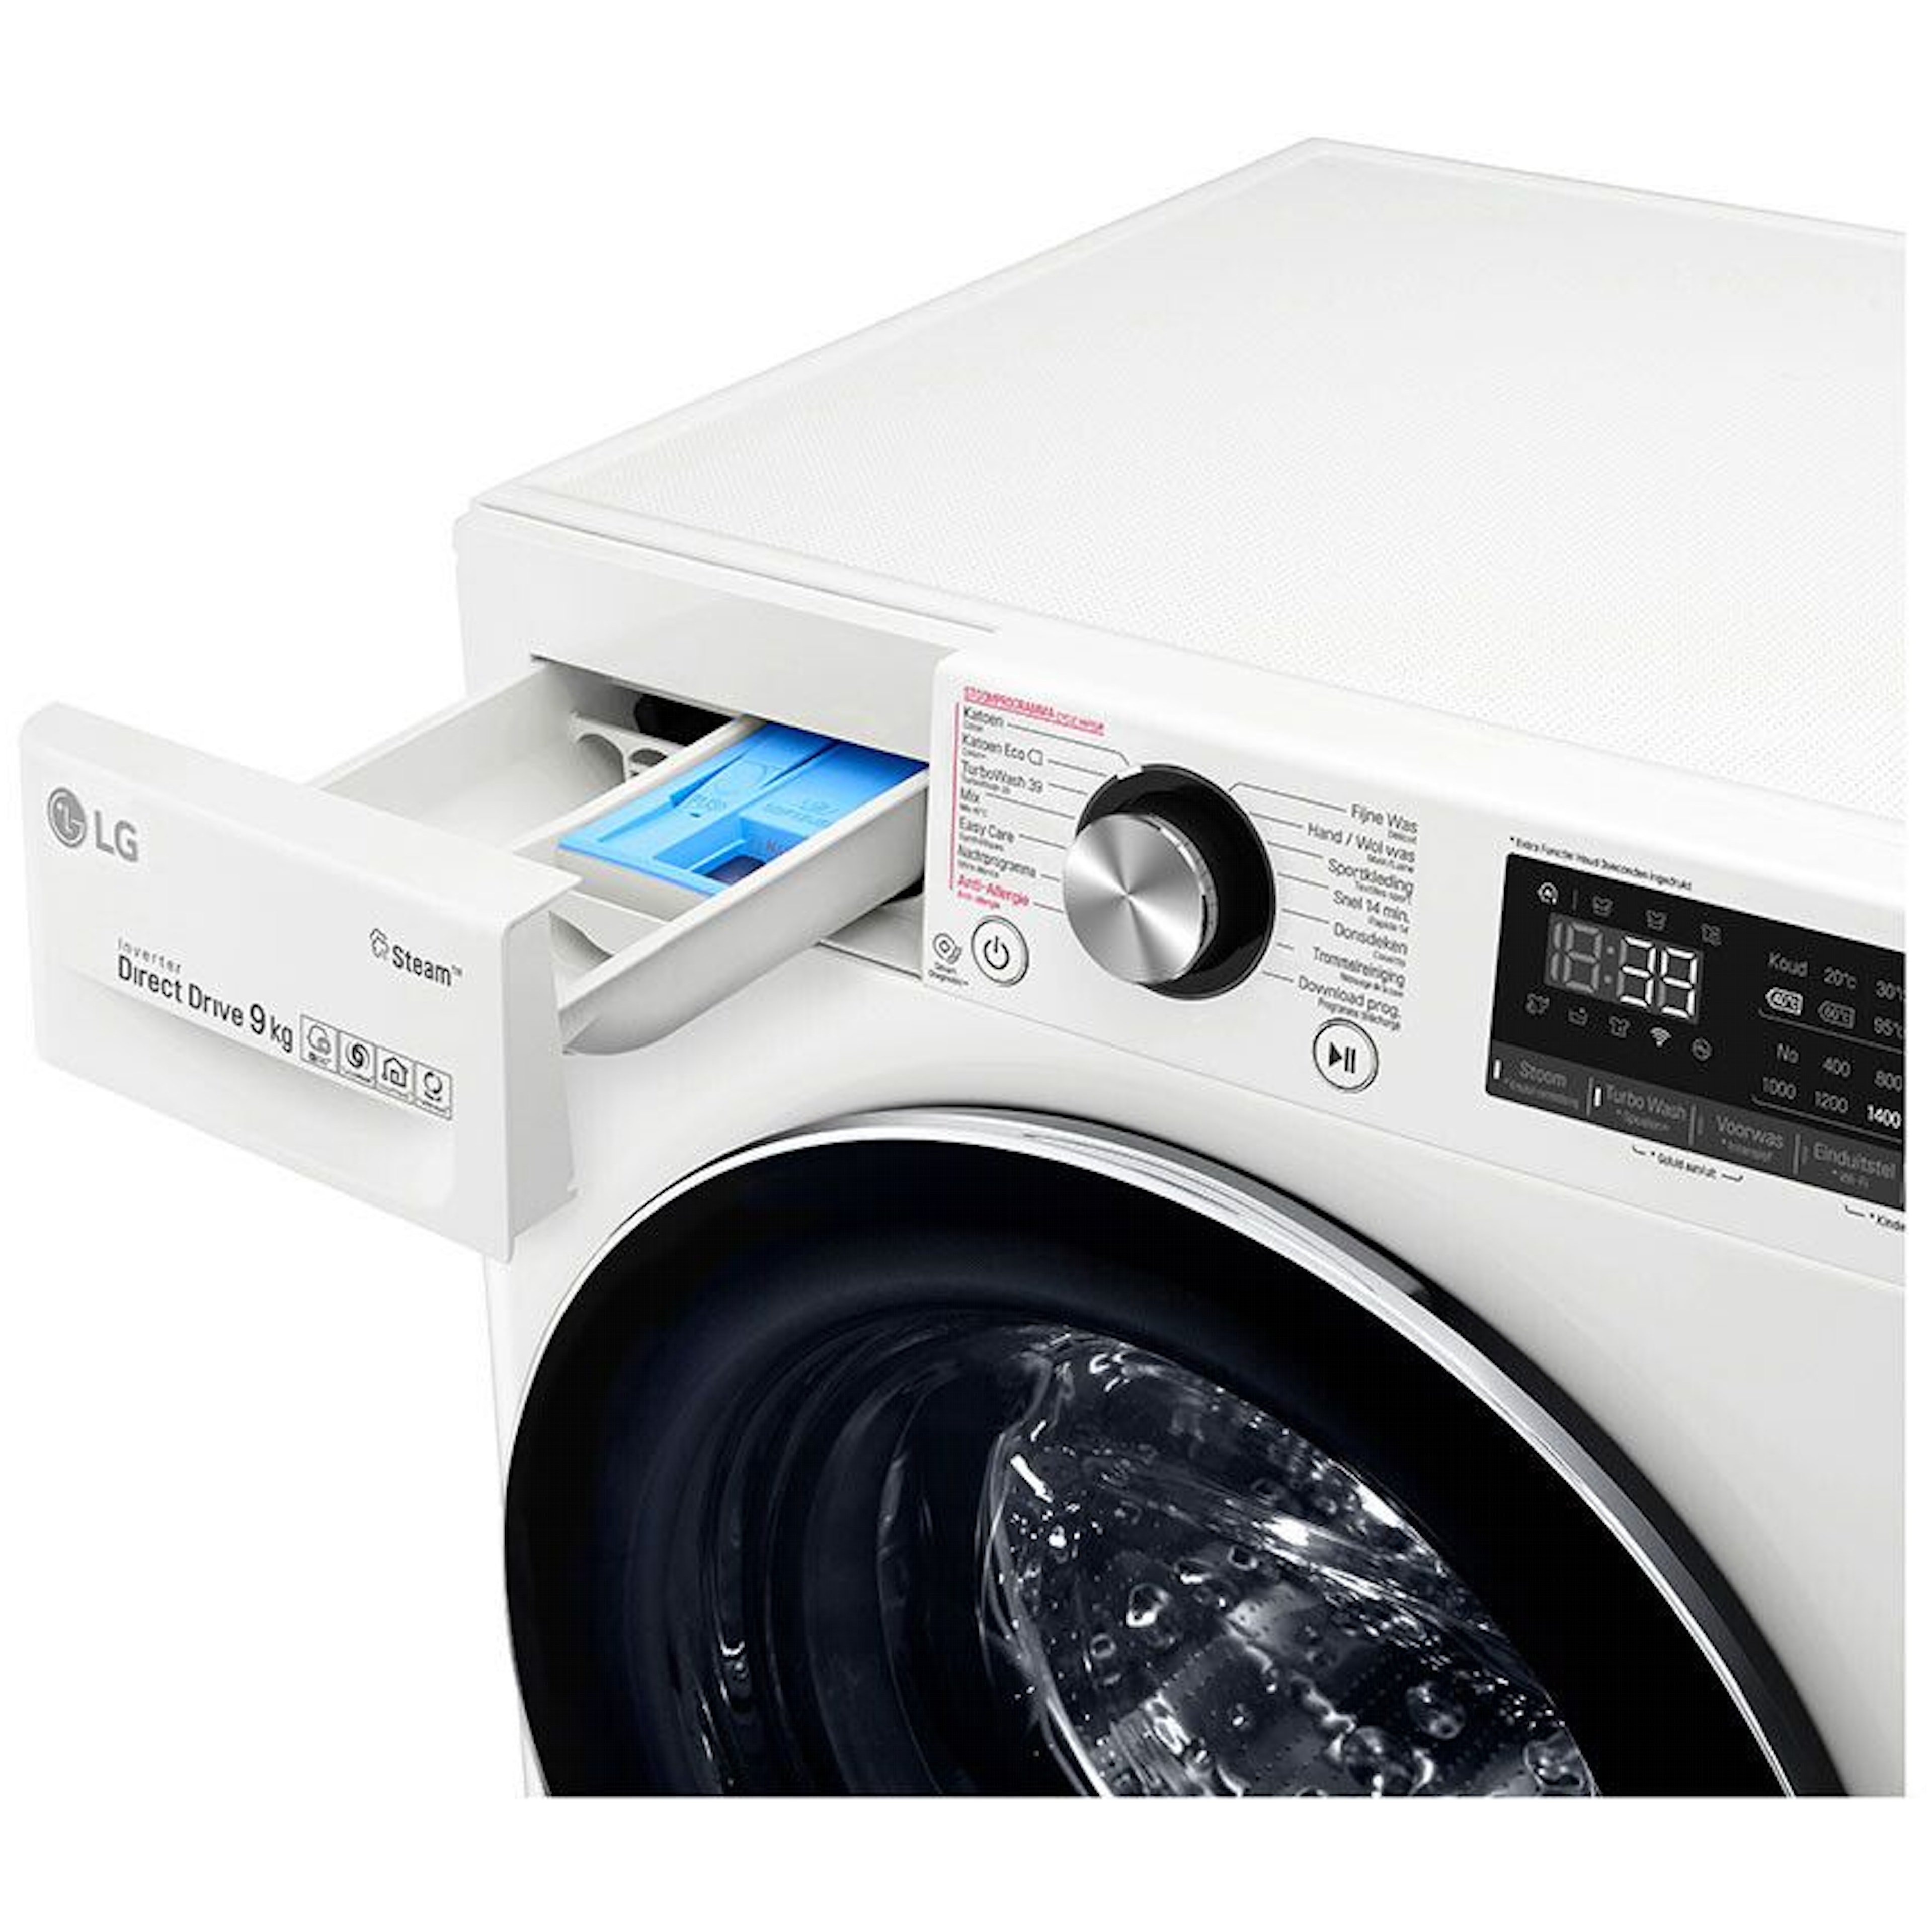 LG wasmachine  F4WV909P2 afbeelding 4